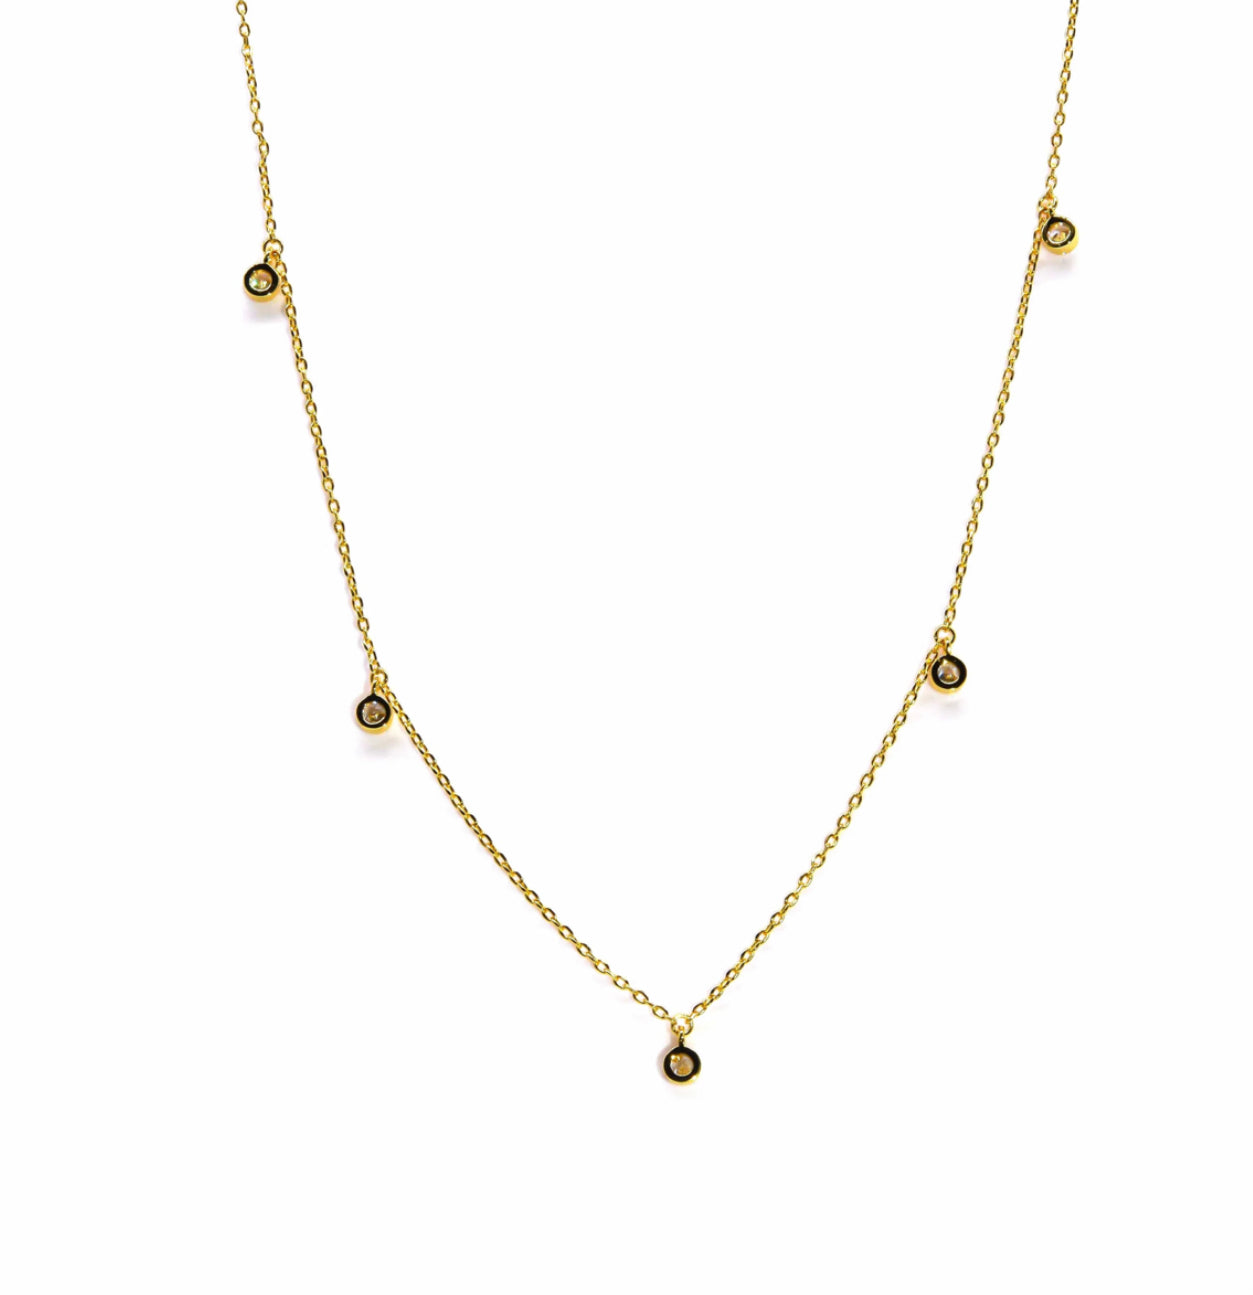 eLiasz & eLLa / Poise Gold Necklace